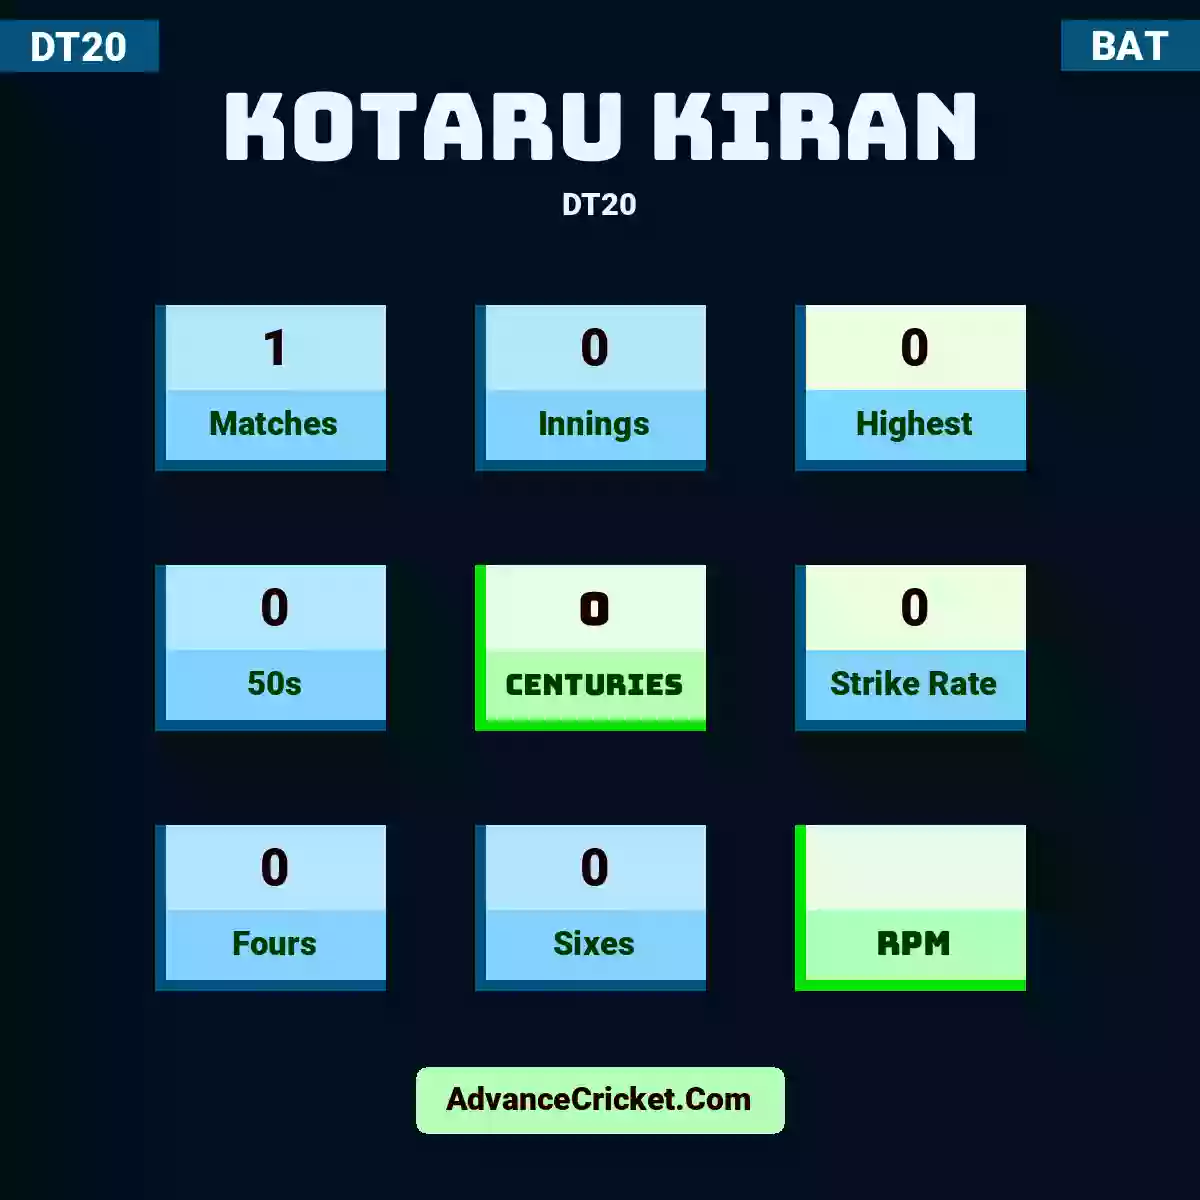 Kotaru Kiran DT20 , Kotaru Kiran played 1 matches, scored 0 runs as highest, 0 half-centuries, and 0 centuries, with a strike rate of 0. K.Kiran hit 0 fours and 0 sixes.